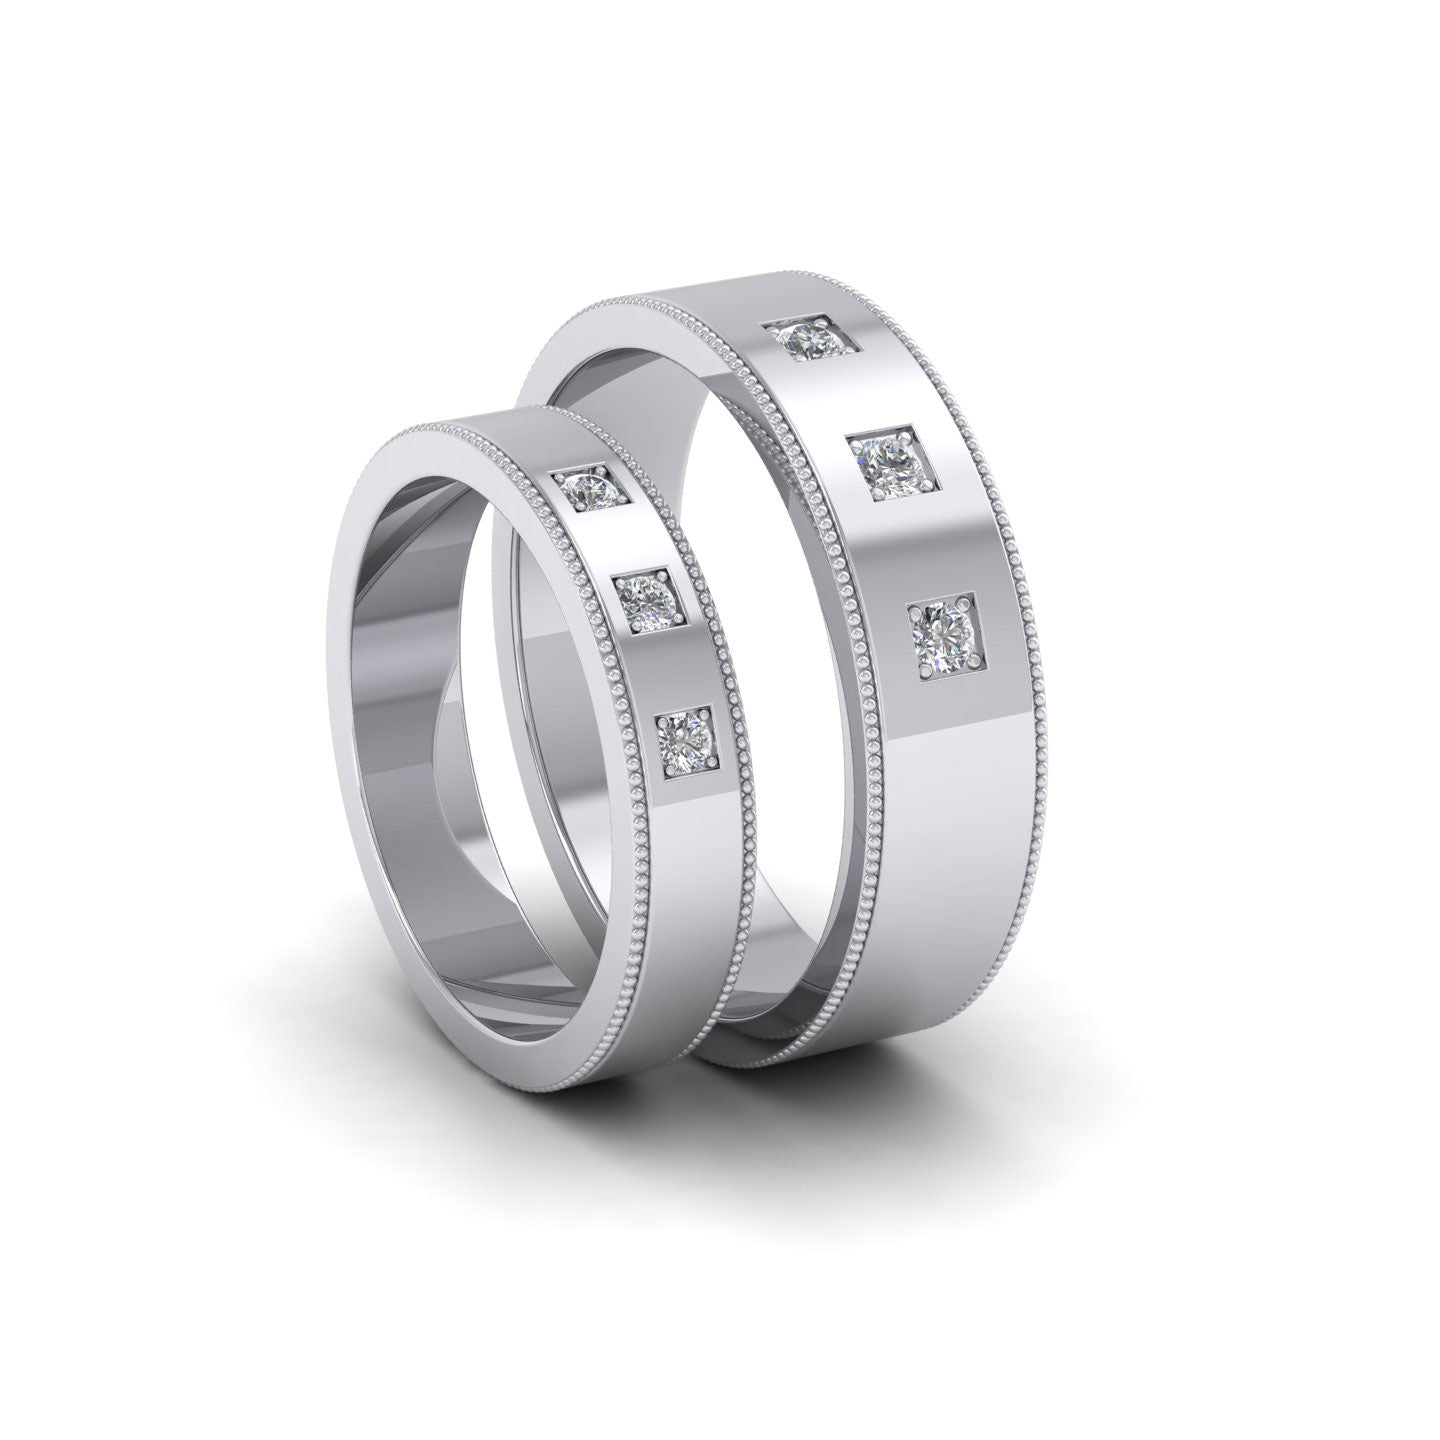 Three Diamonds With Square Setting 500 Palladium 6mm Wedding Ring With Millgrain Edge